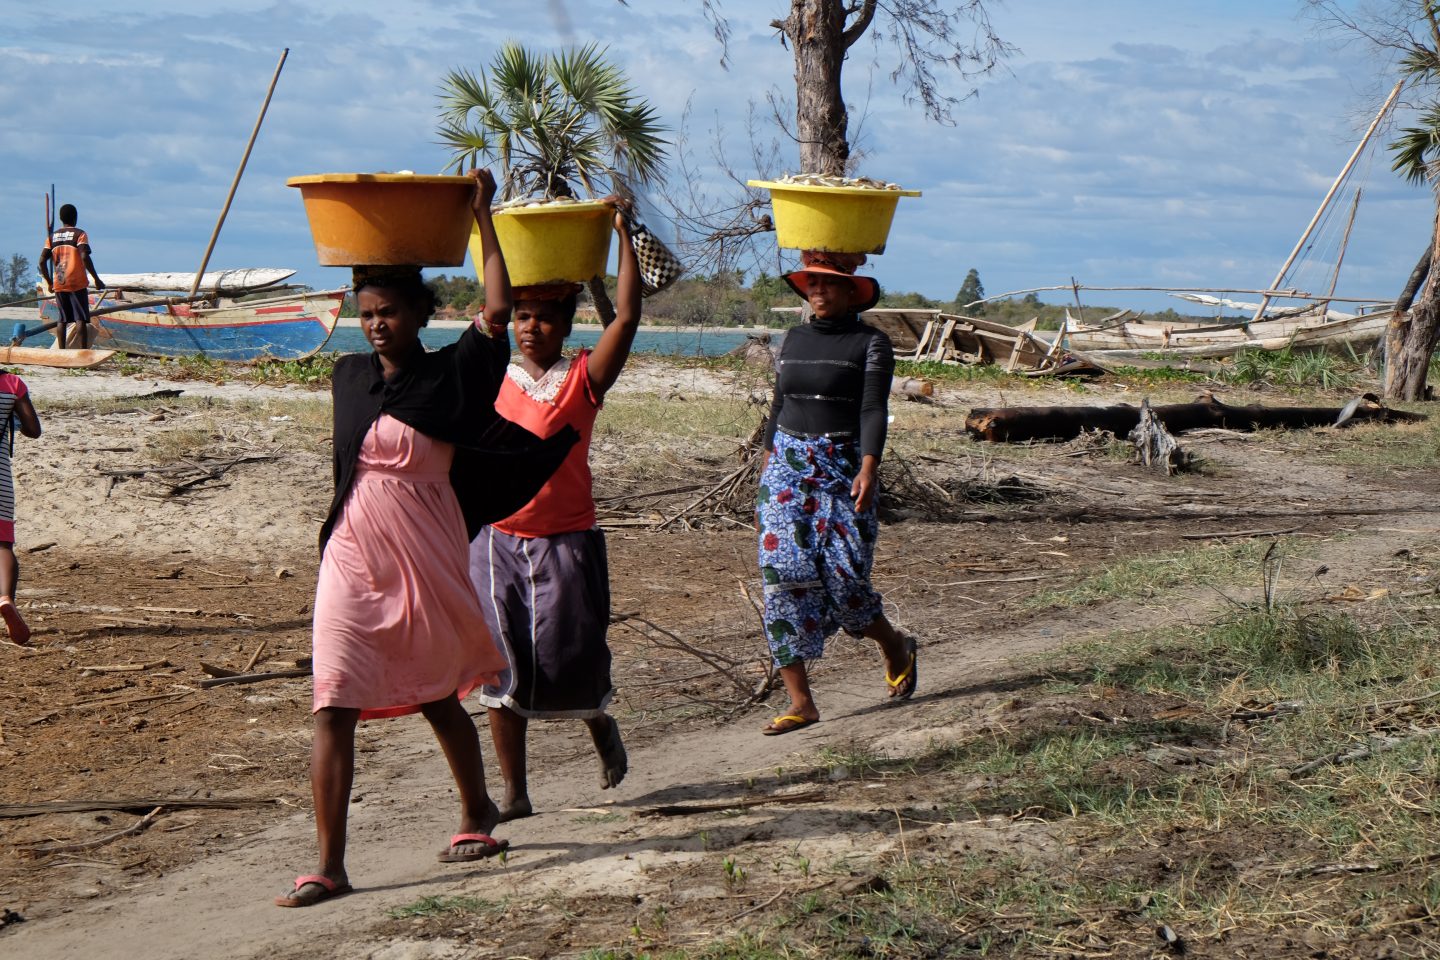 Madagascan women bring a fish catch into their village